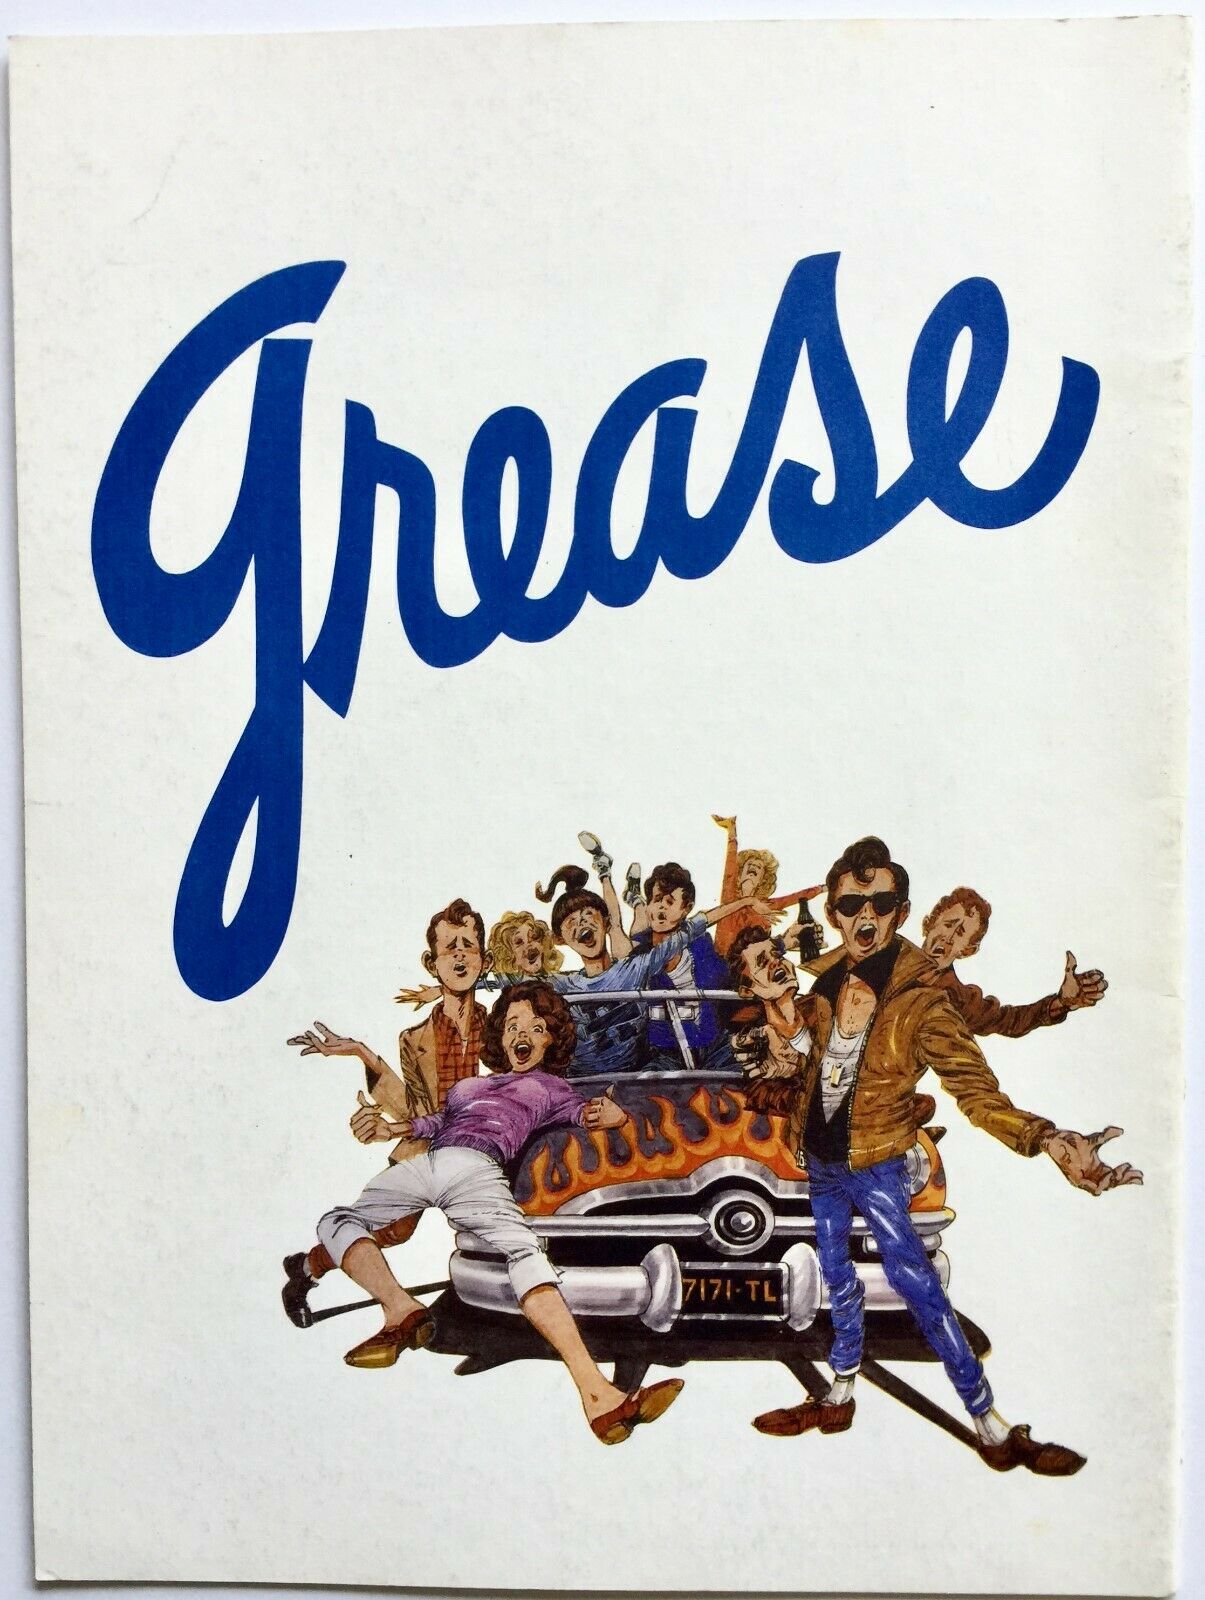 "grease" Original Large Vintage 1977 Broadway Souvenir Theatre Program